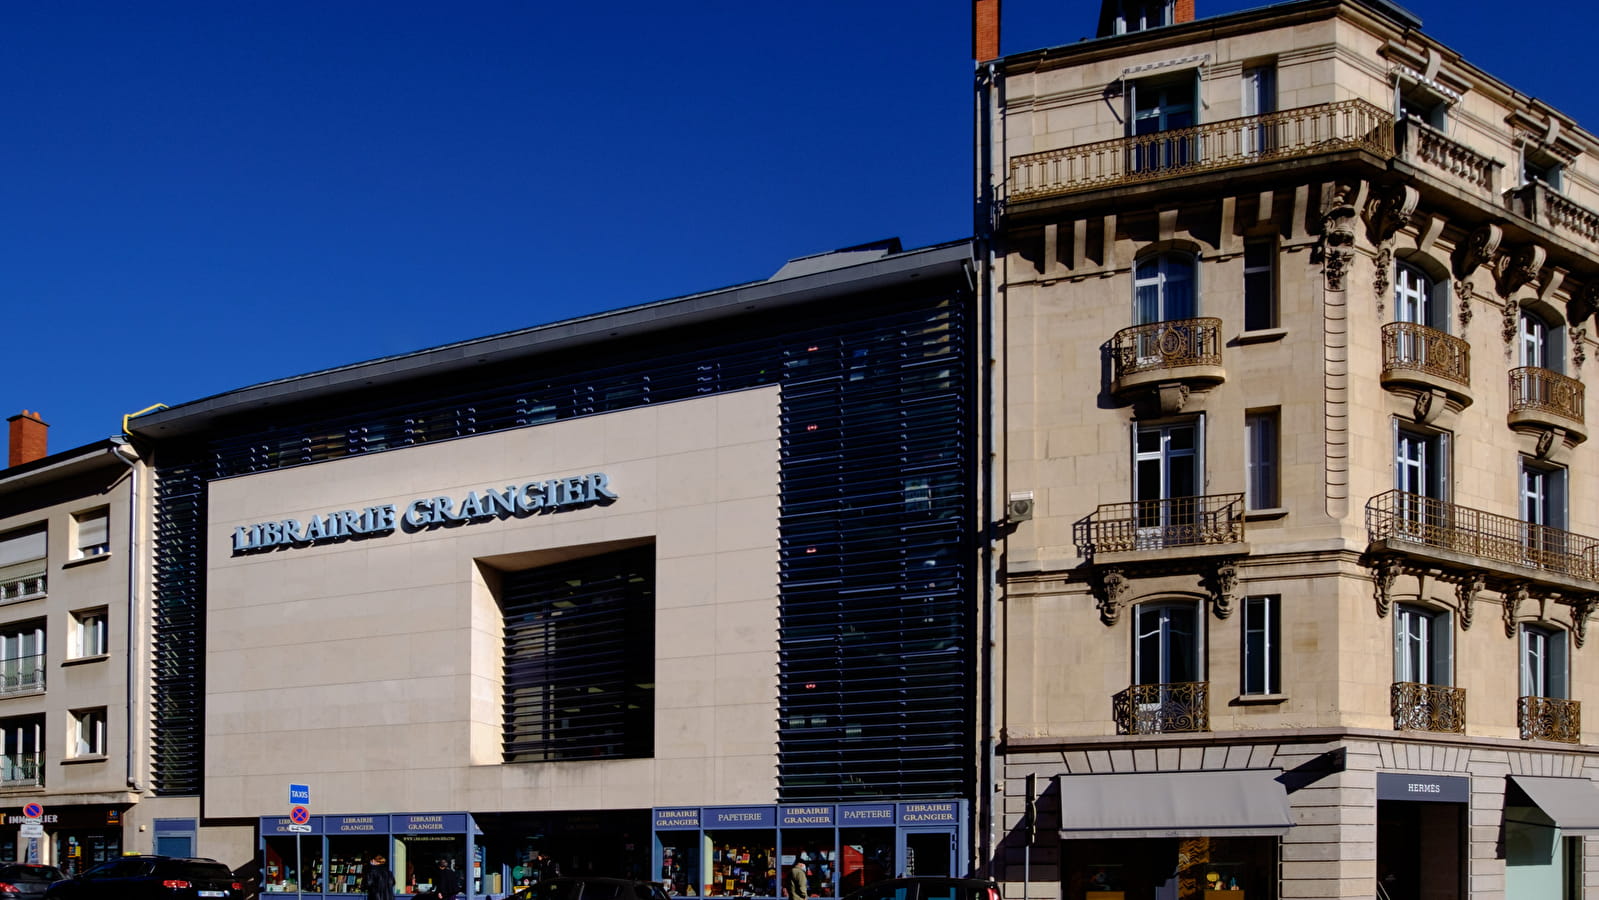 Librairie Papeterie Grangier